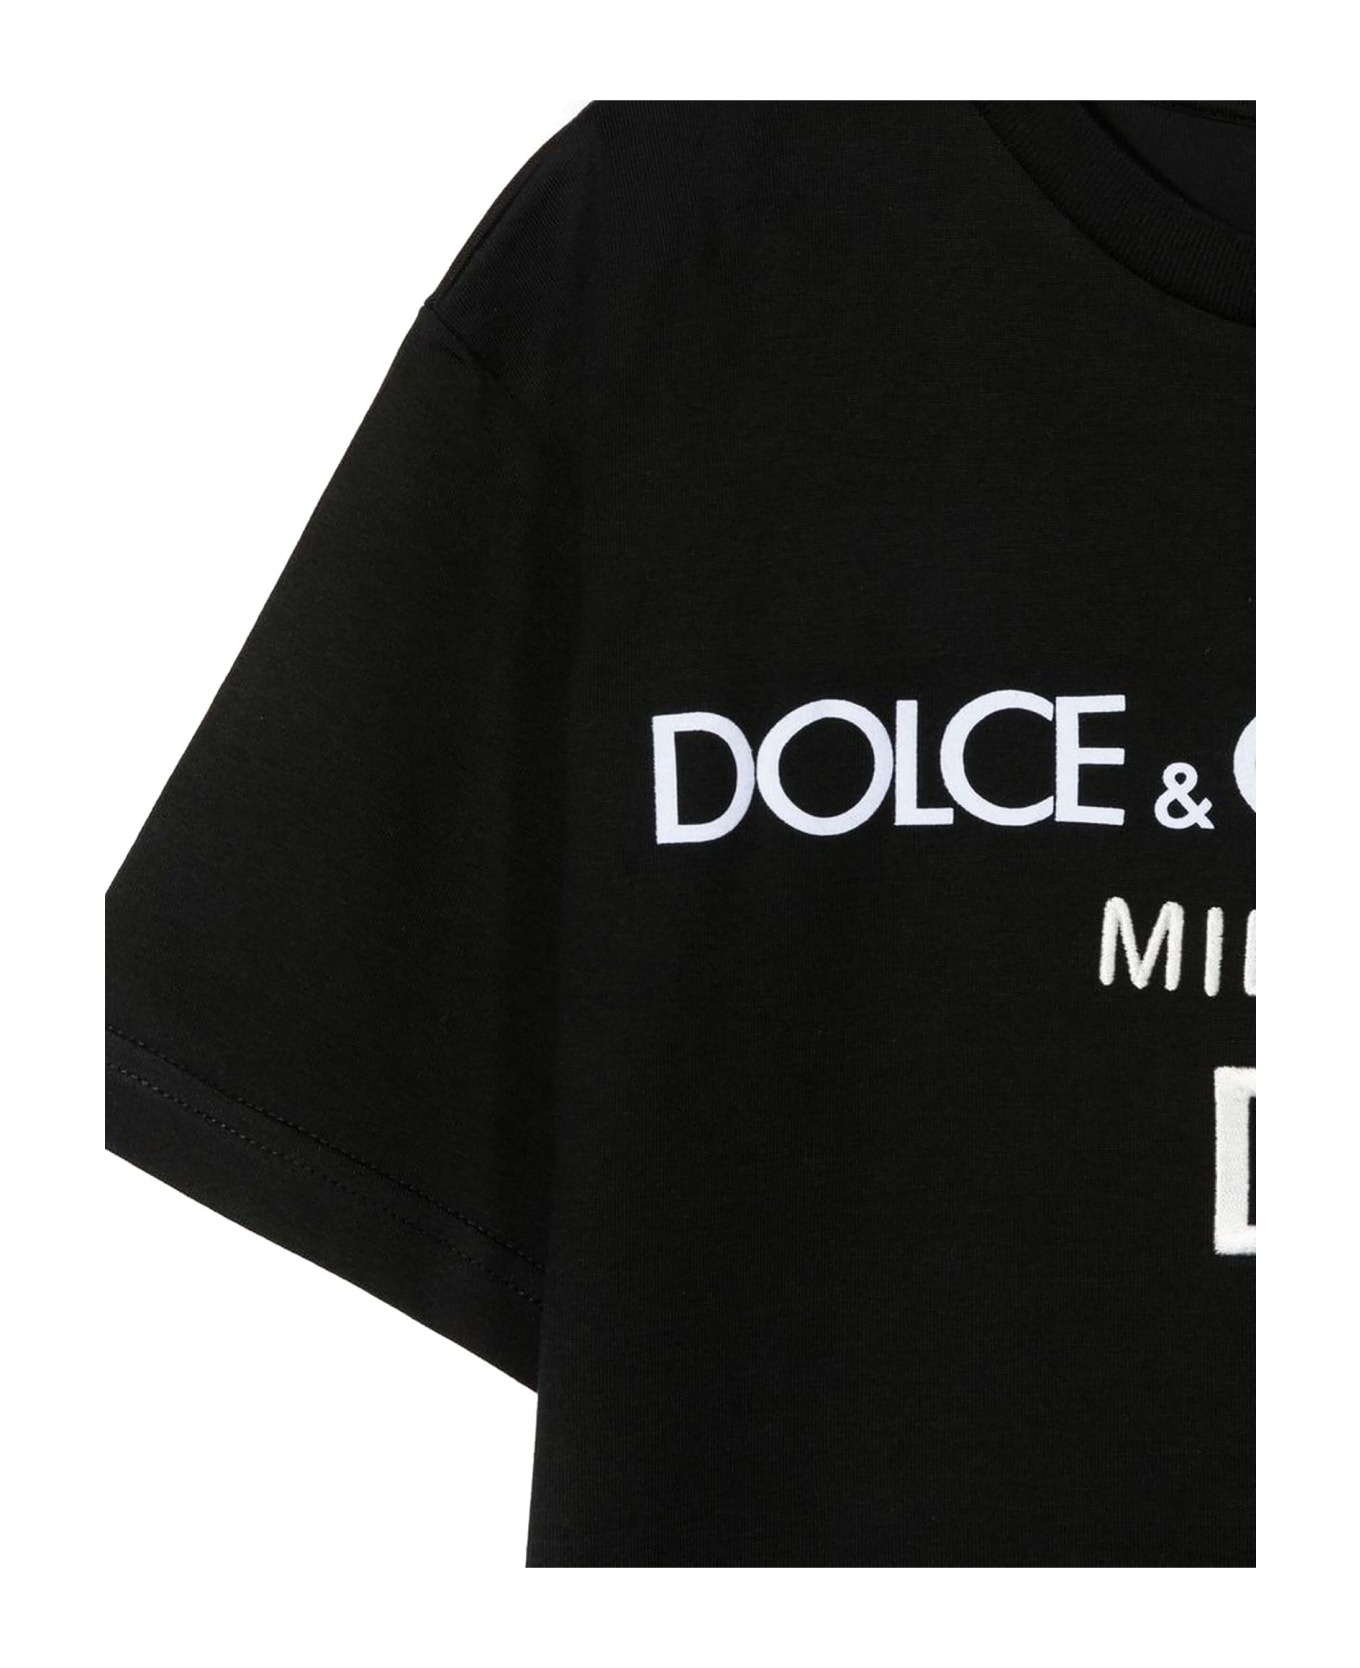 Dolce & Gabbana Black Cotton Tshirt - Nero